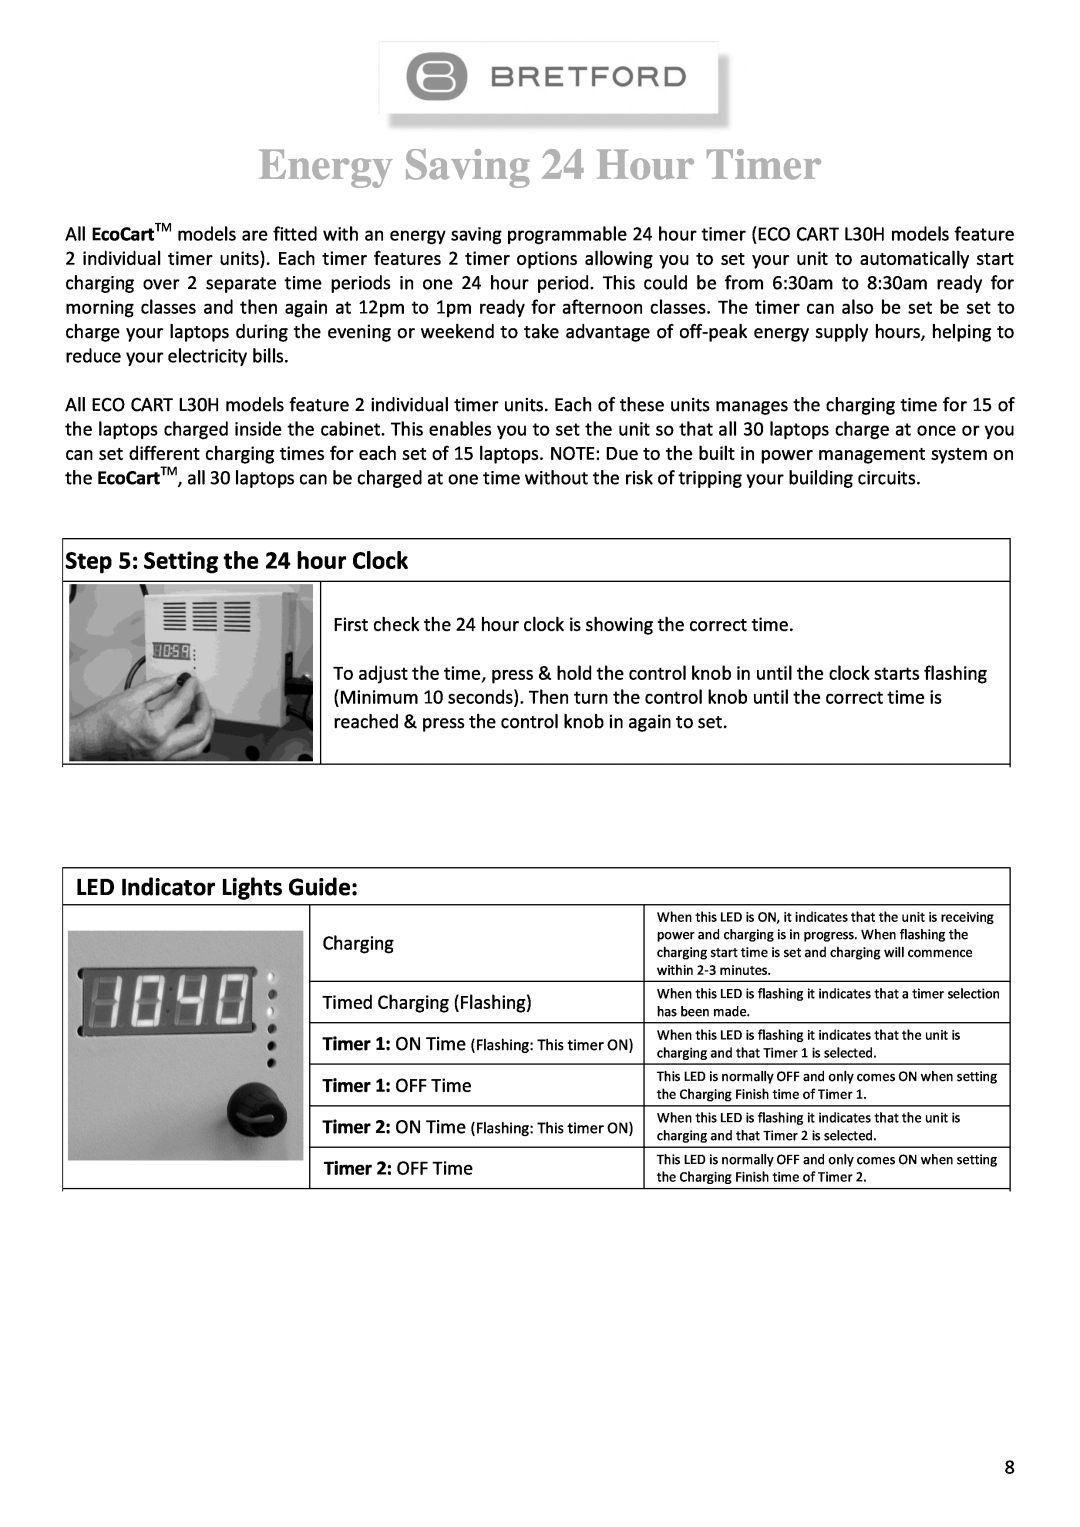 Bretford L16V Energy Saving 24 Hour Timer, Setting the 24 hour Clock, LED Indicator Lights Guide, Timer 1 OFF Time 